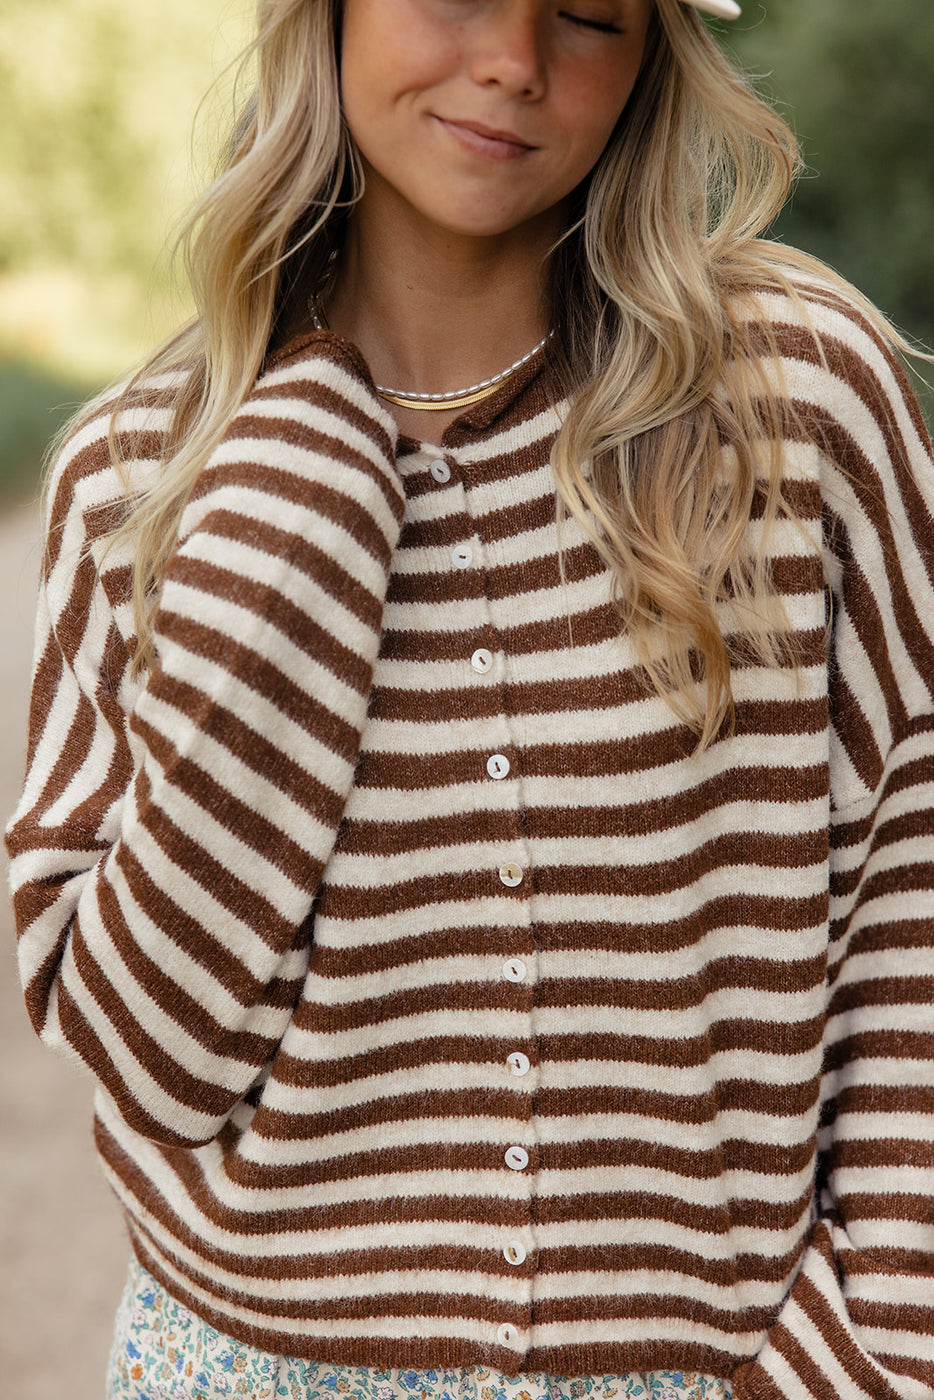 a woman wearing a striped sweater